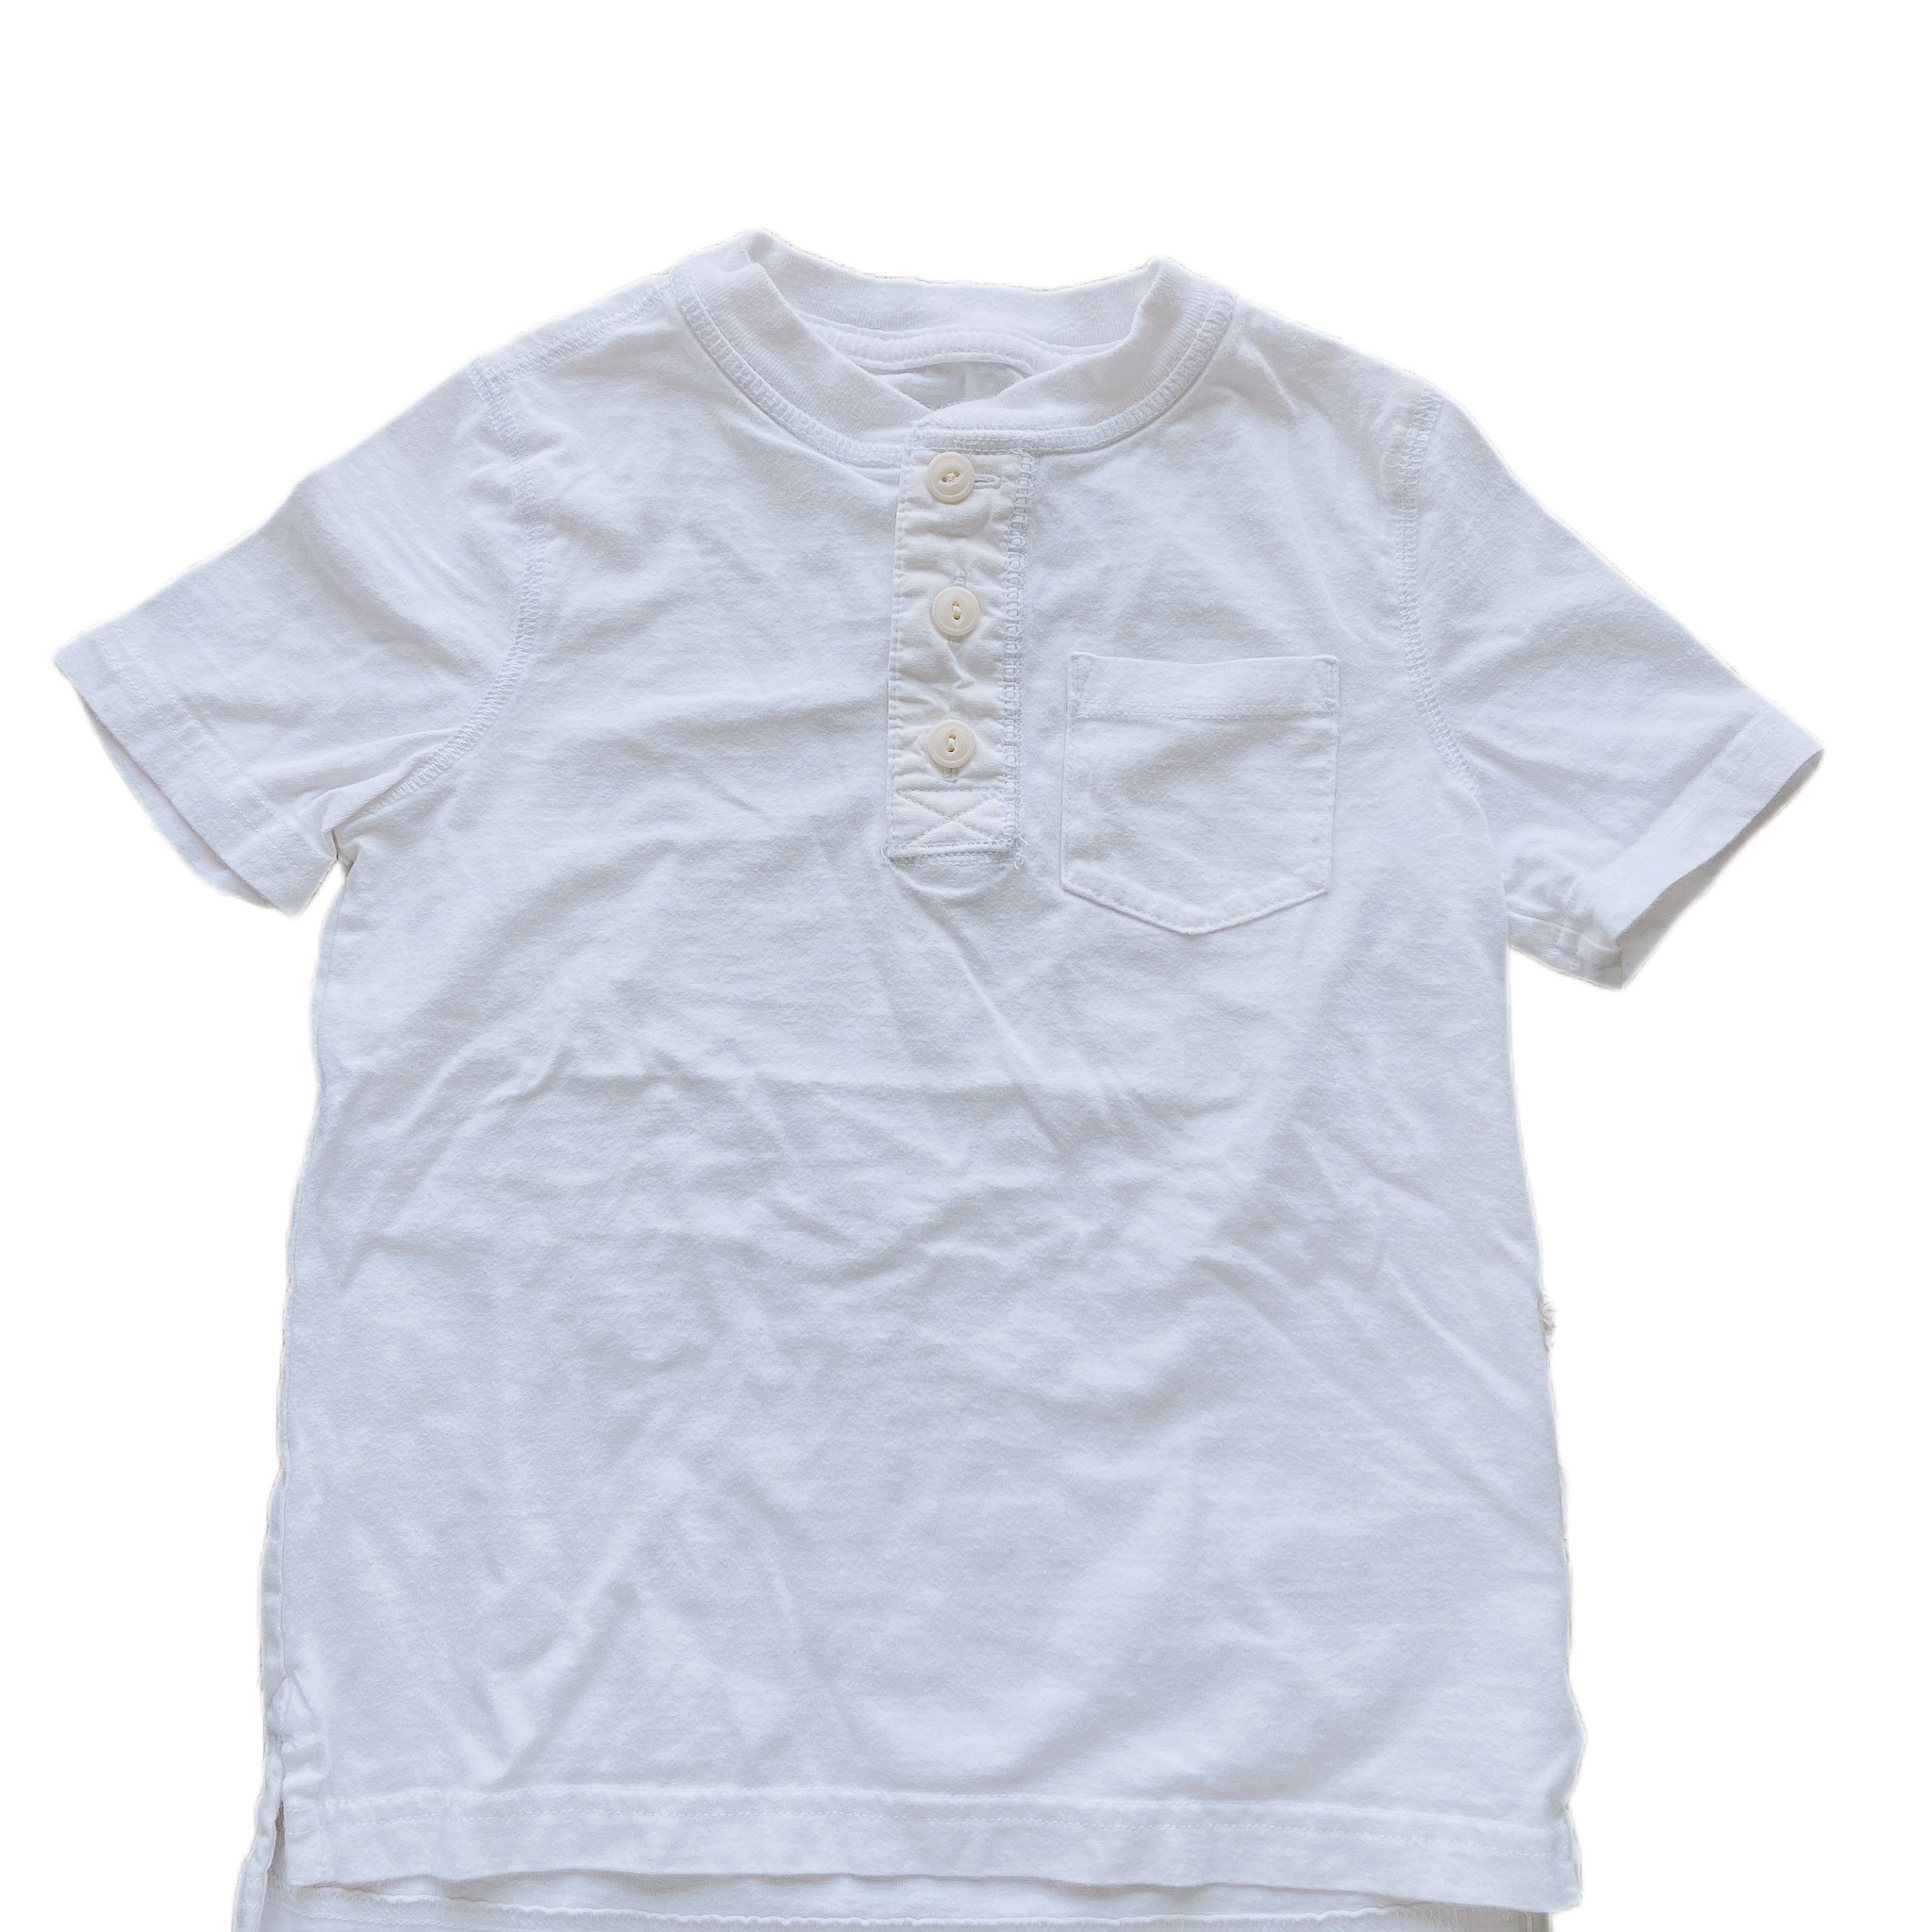 Gap Short Sleeve T Shirt(4Y)